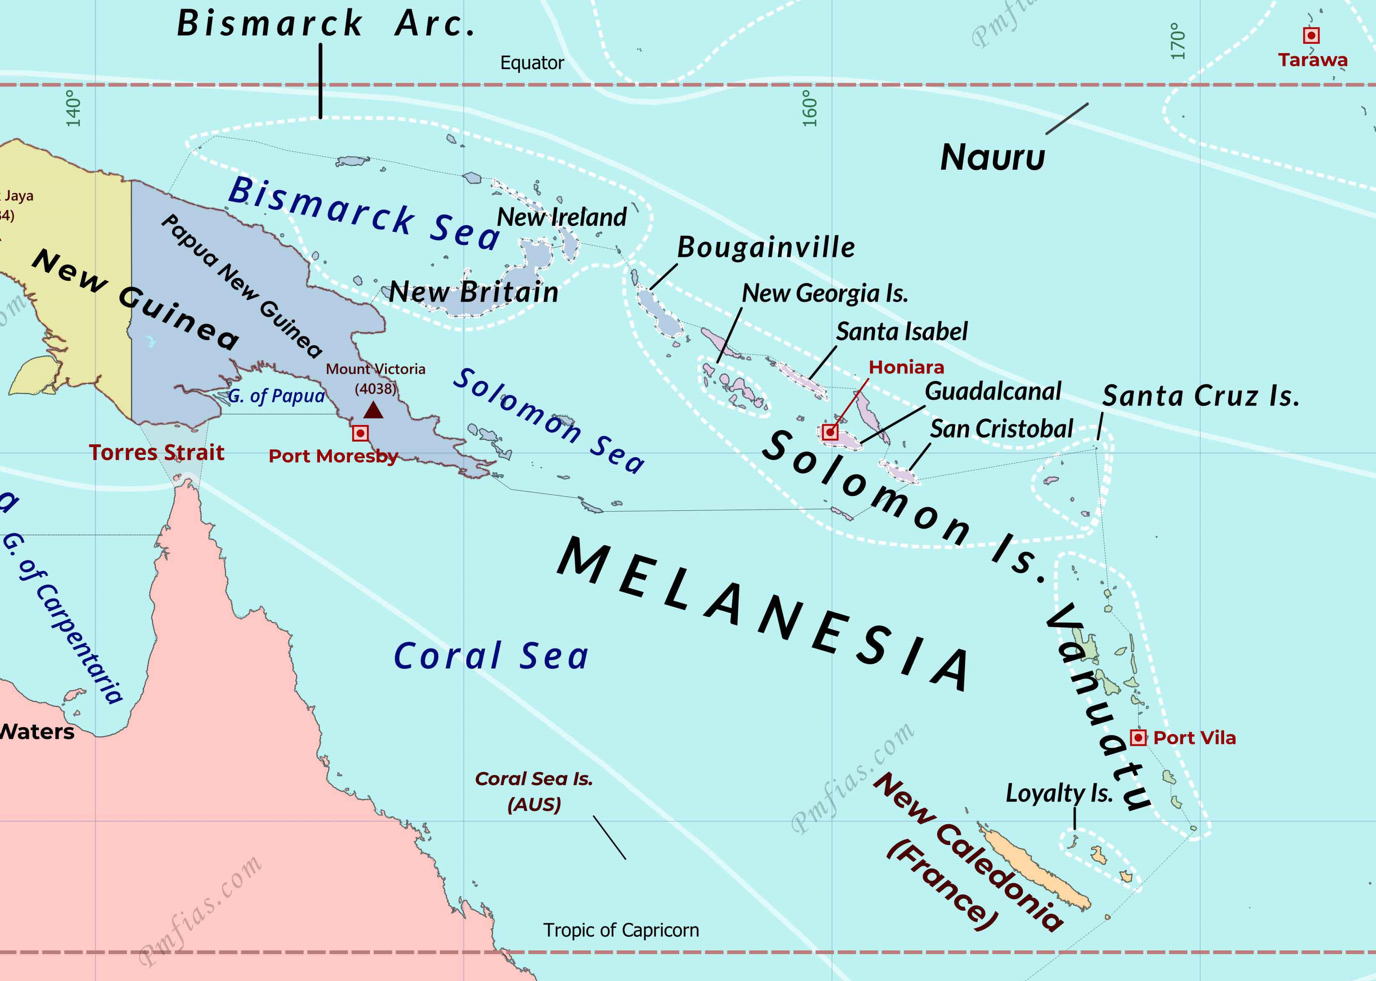 Solomon Islands located in Melanesia.